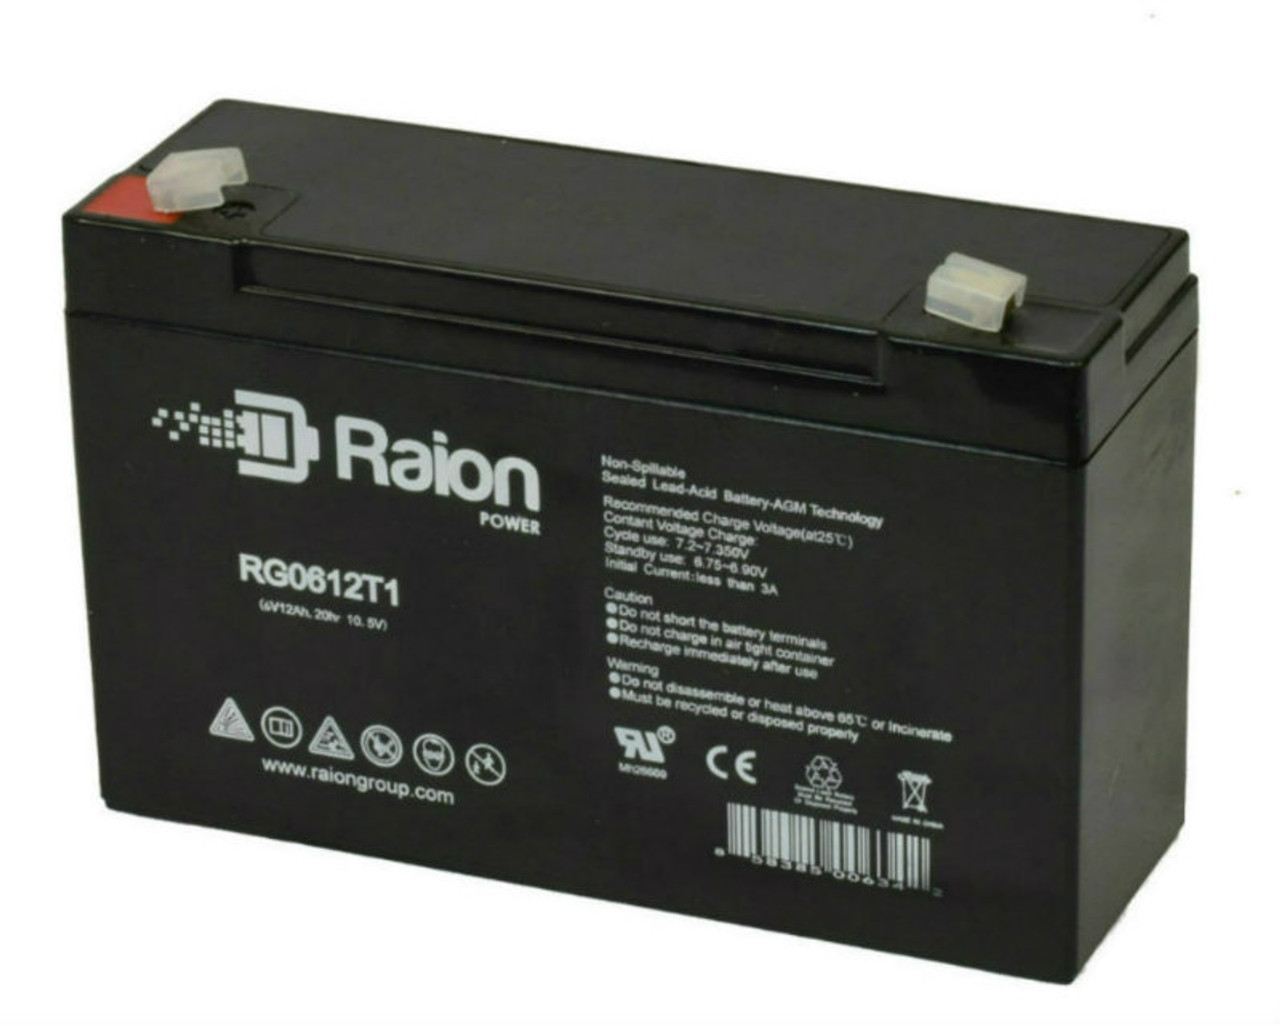 Raion Power RG06120T1 Replacement Battery for Sonnenschein PowerWare 1000